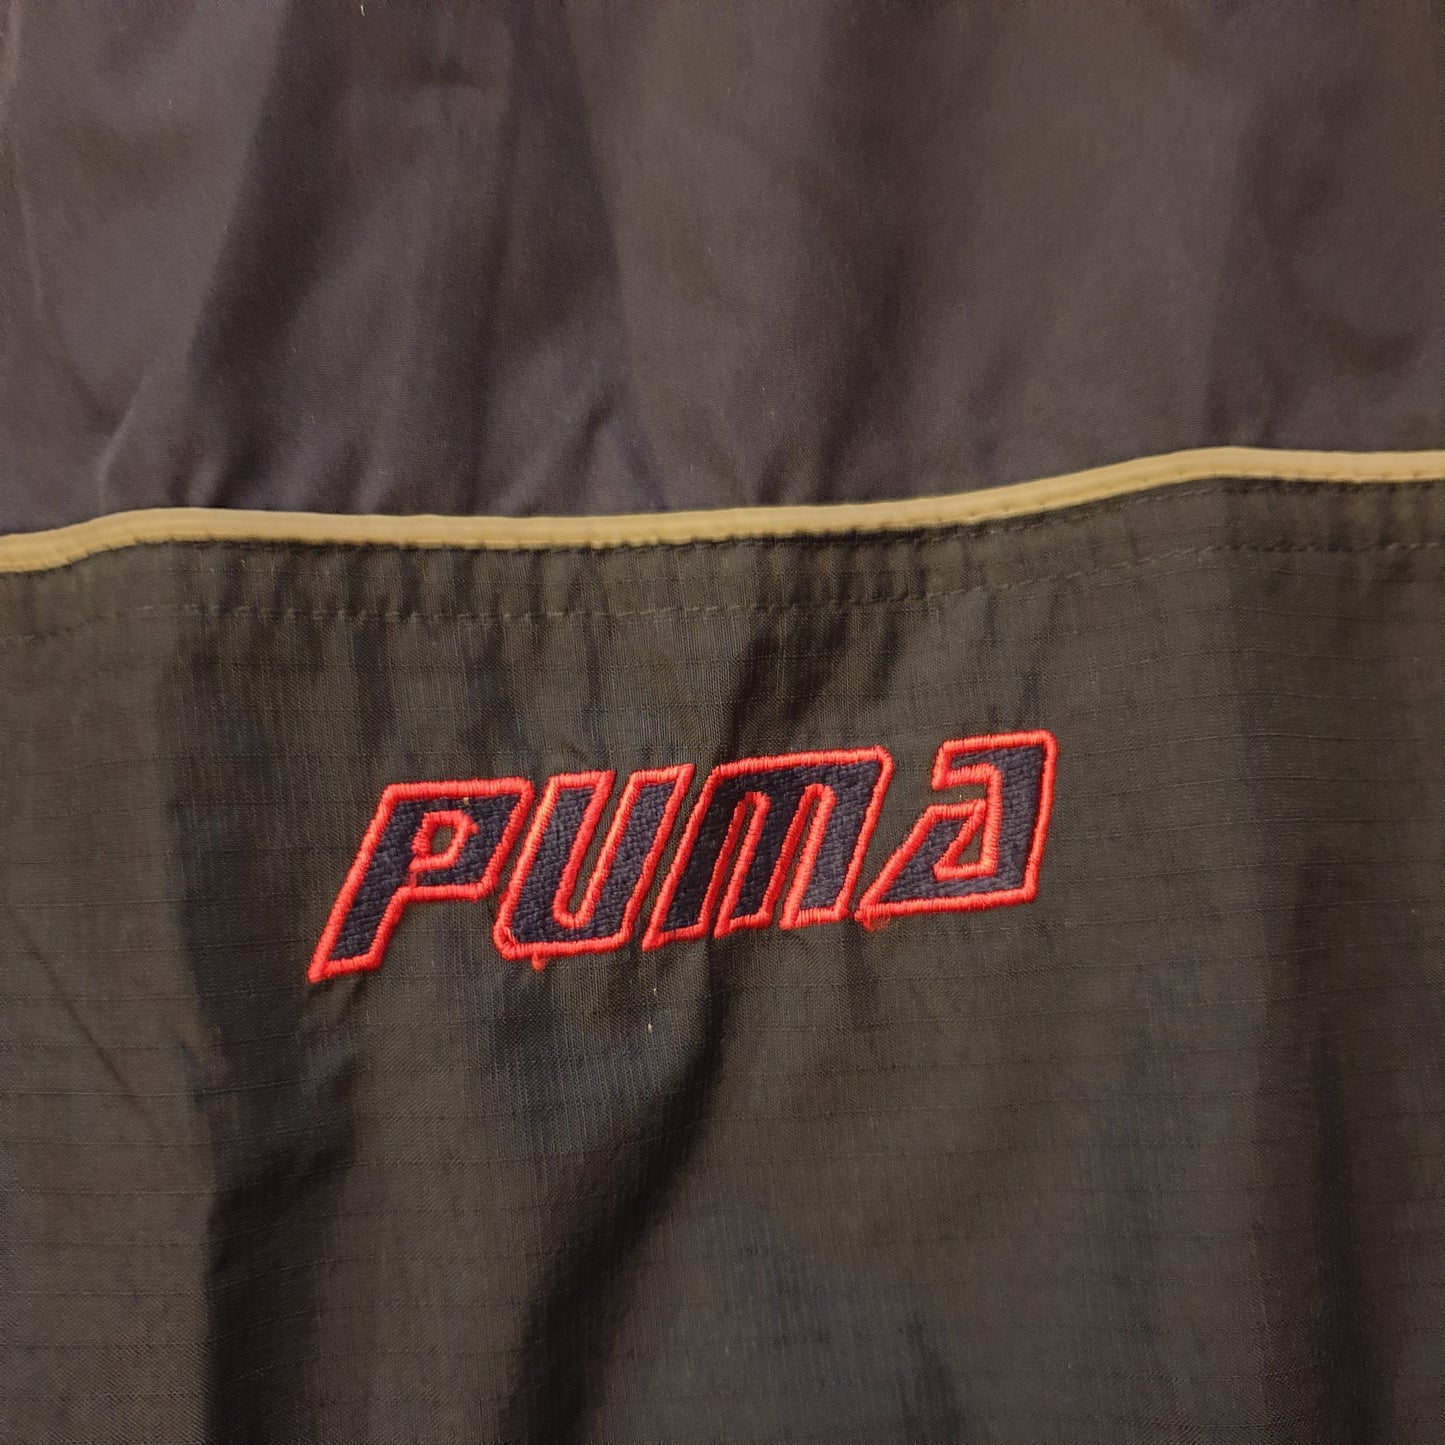 Puma Light Jacket XL